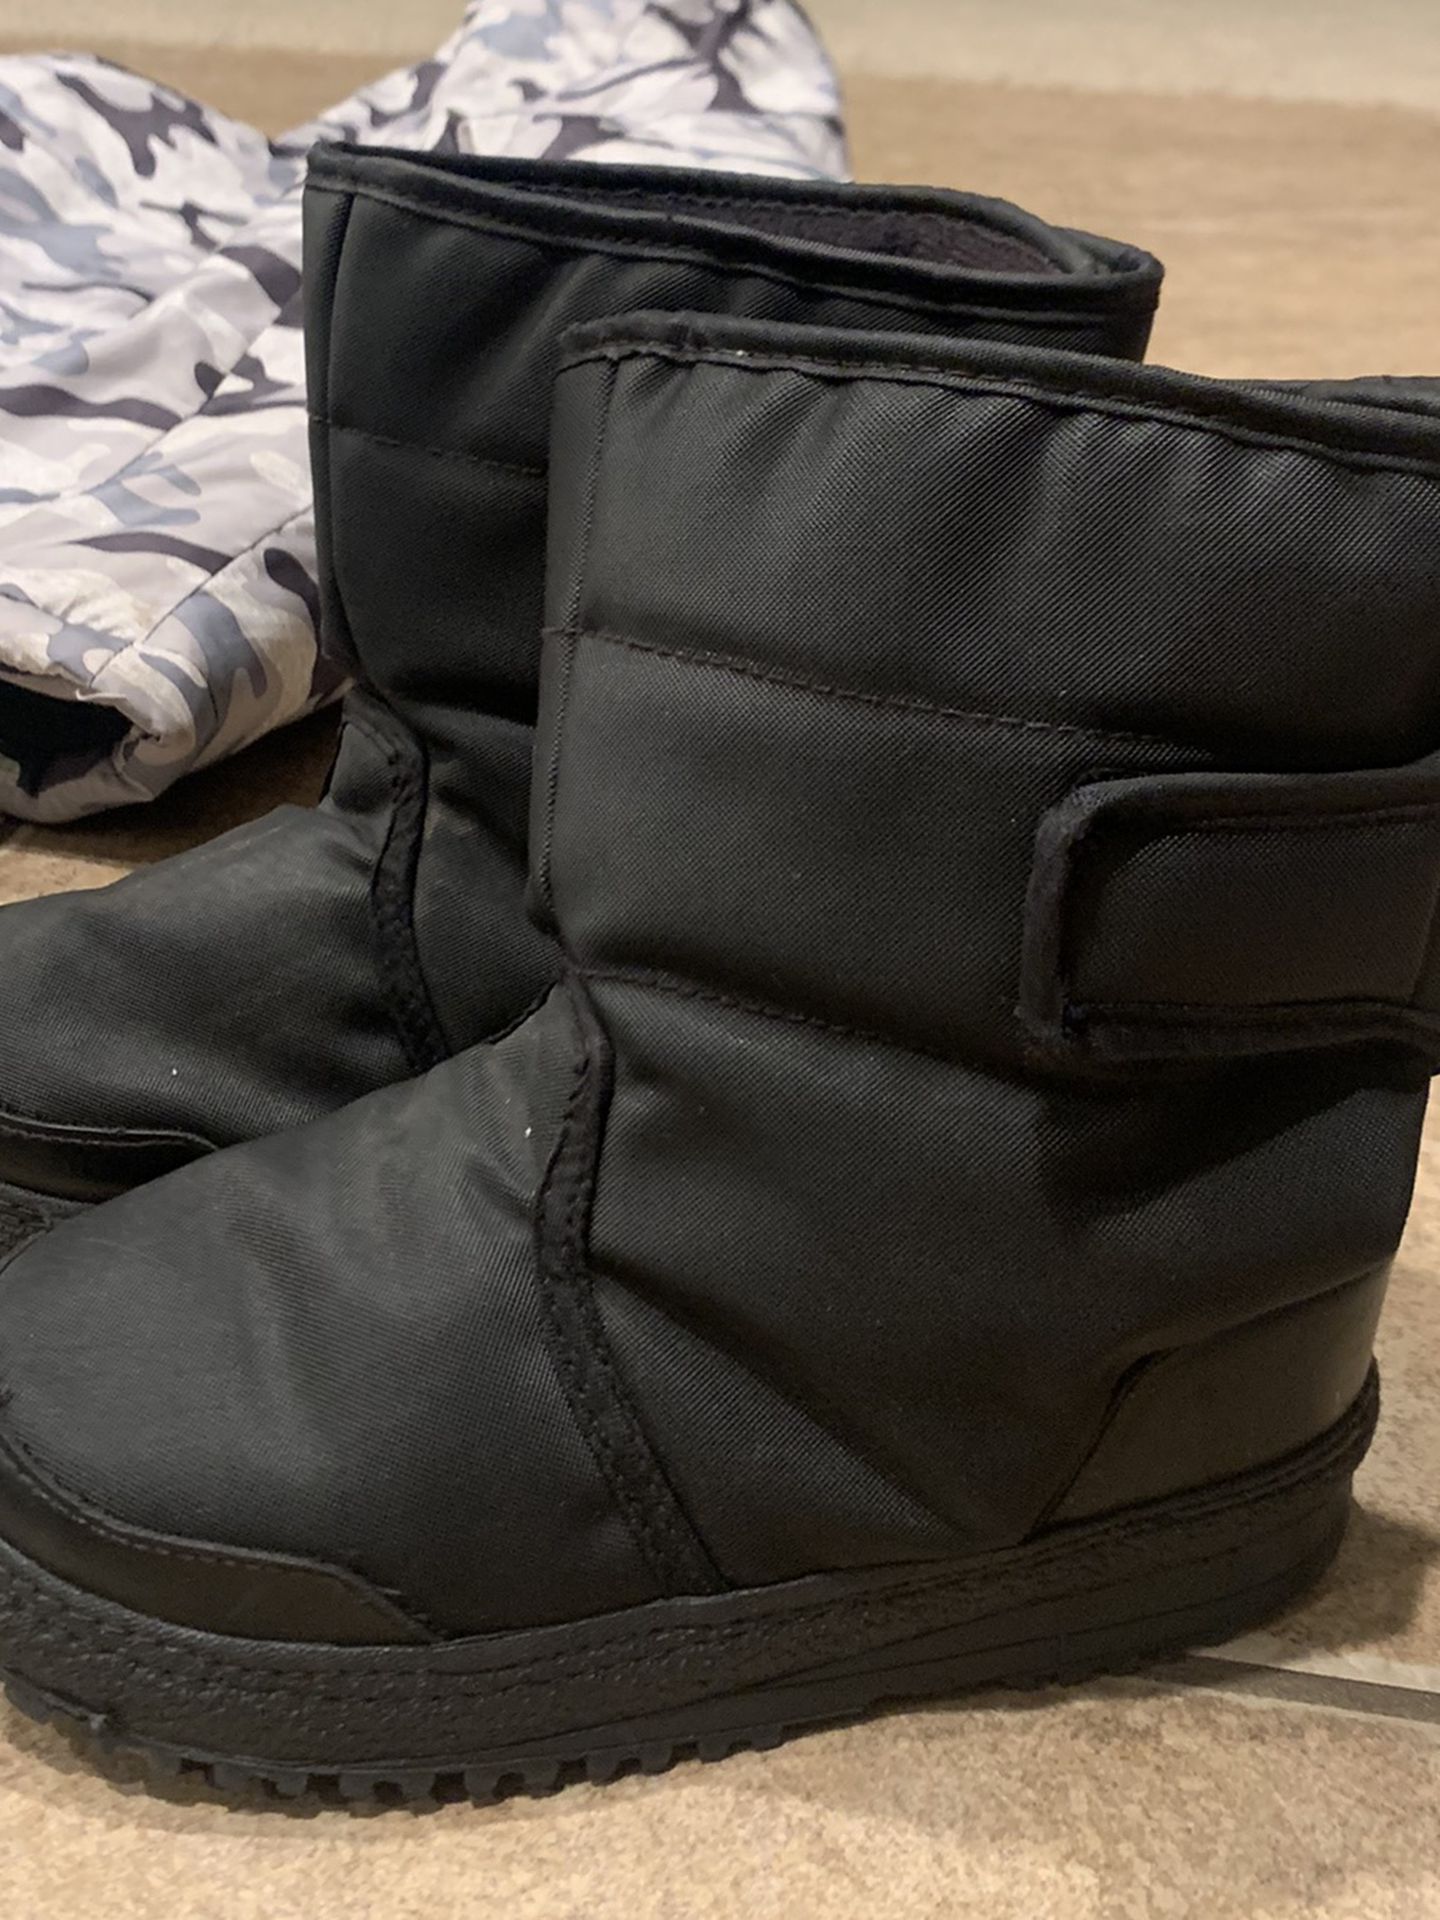 Boys Snow Boots - Size 13